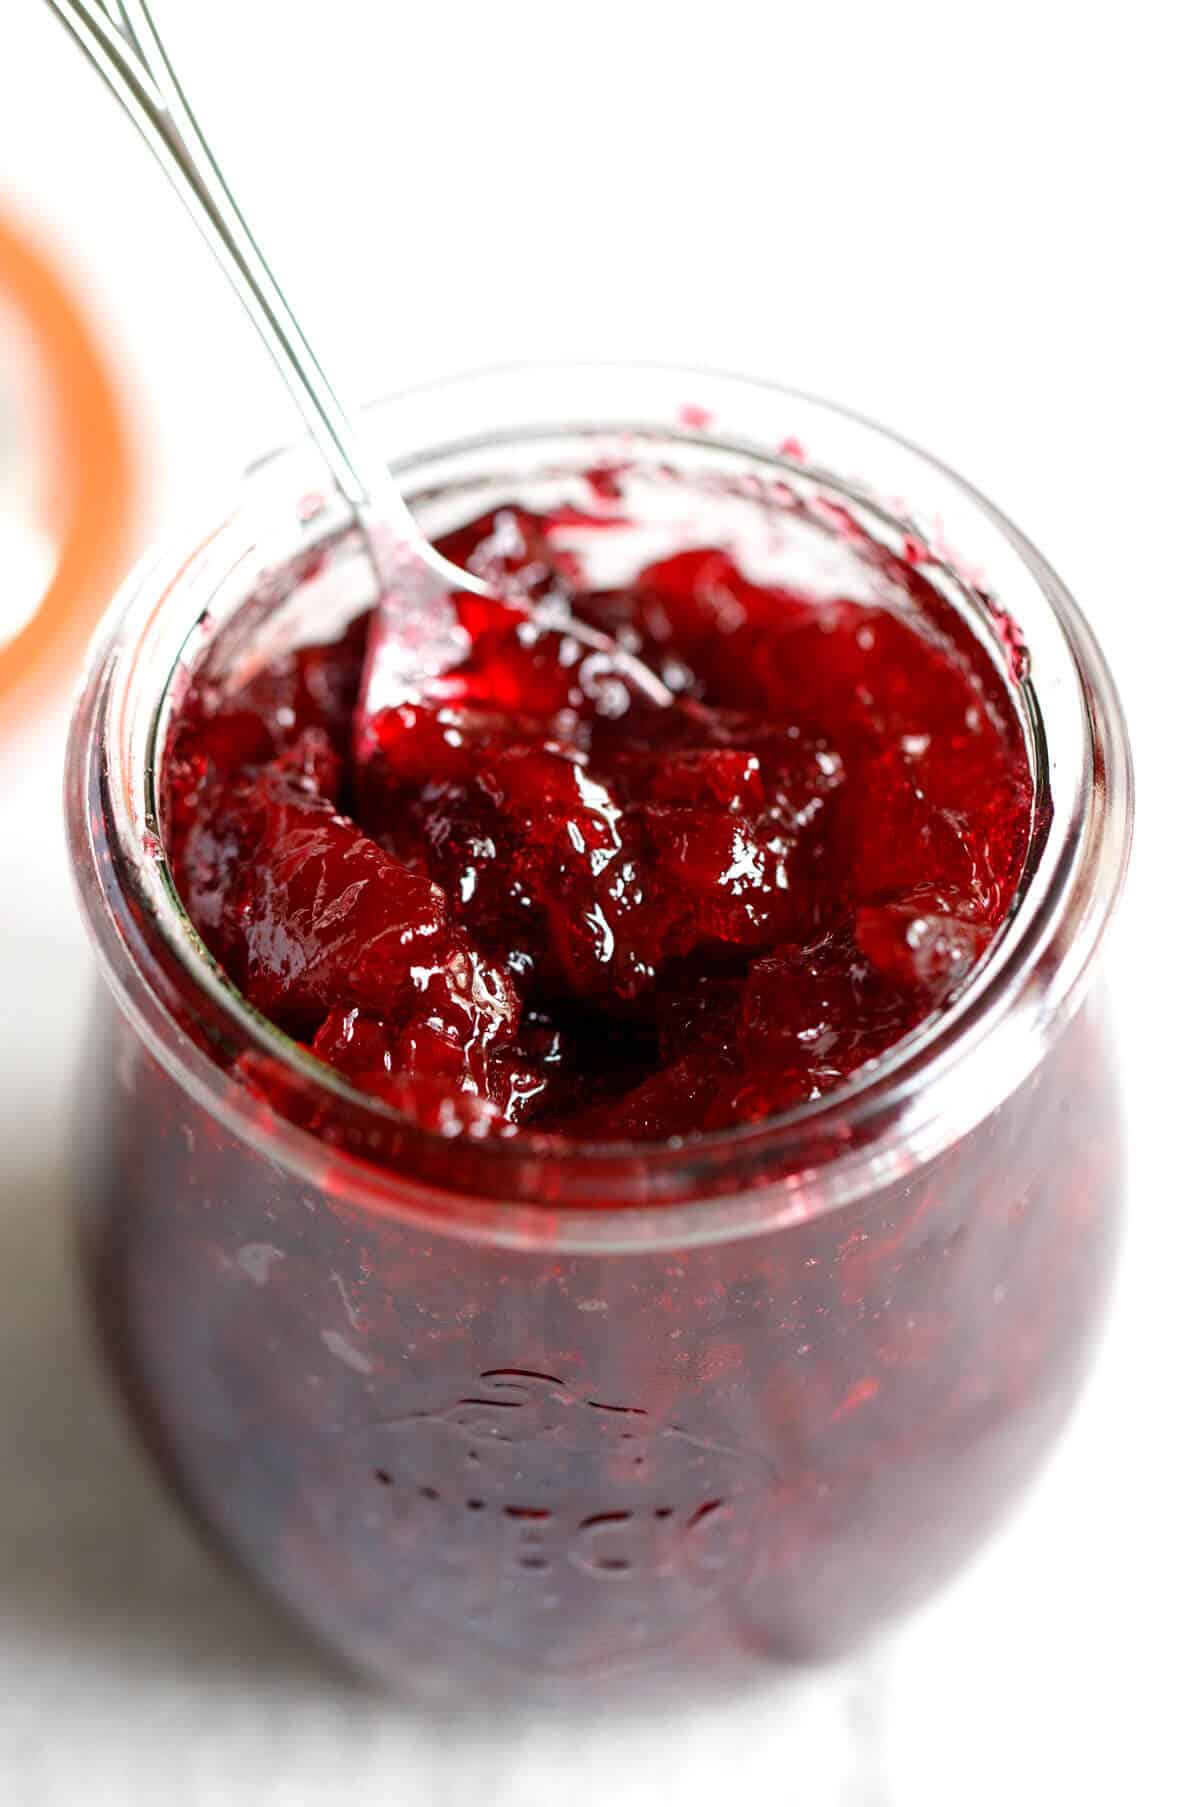 Homemade cherry jam - Cooking LSL